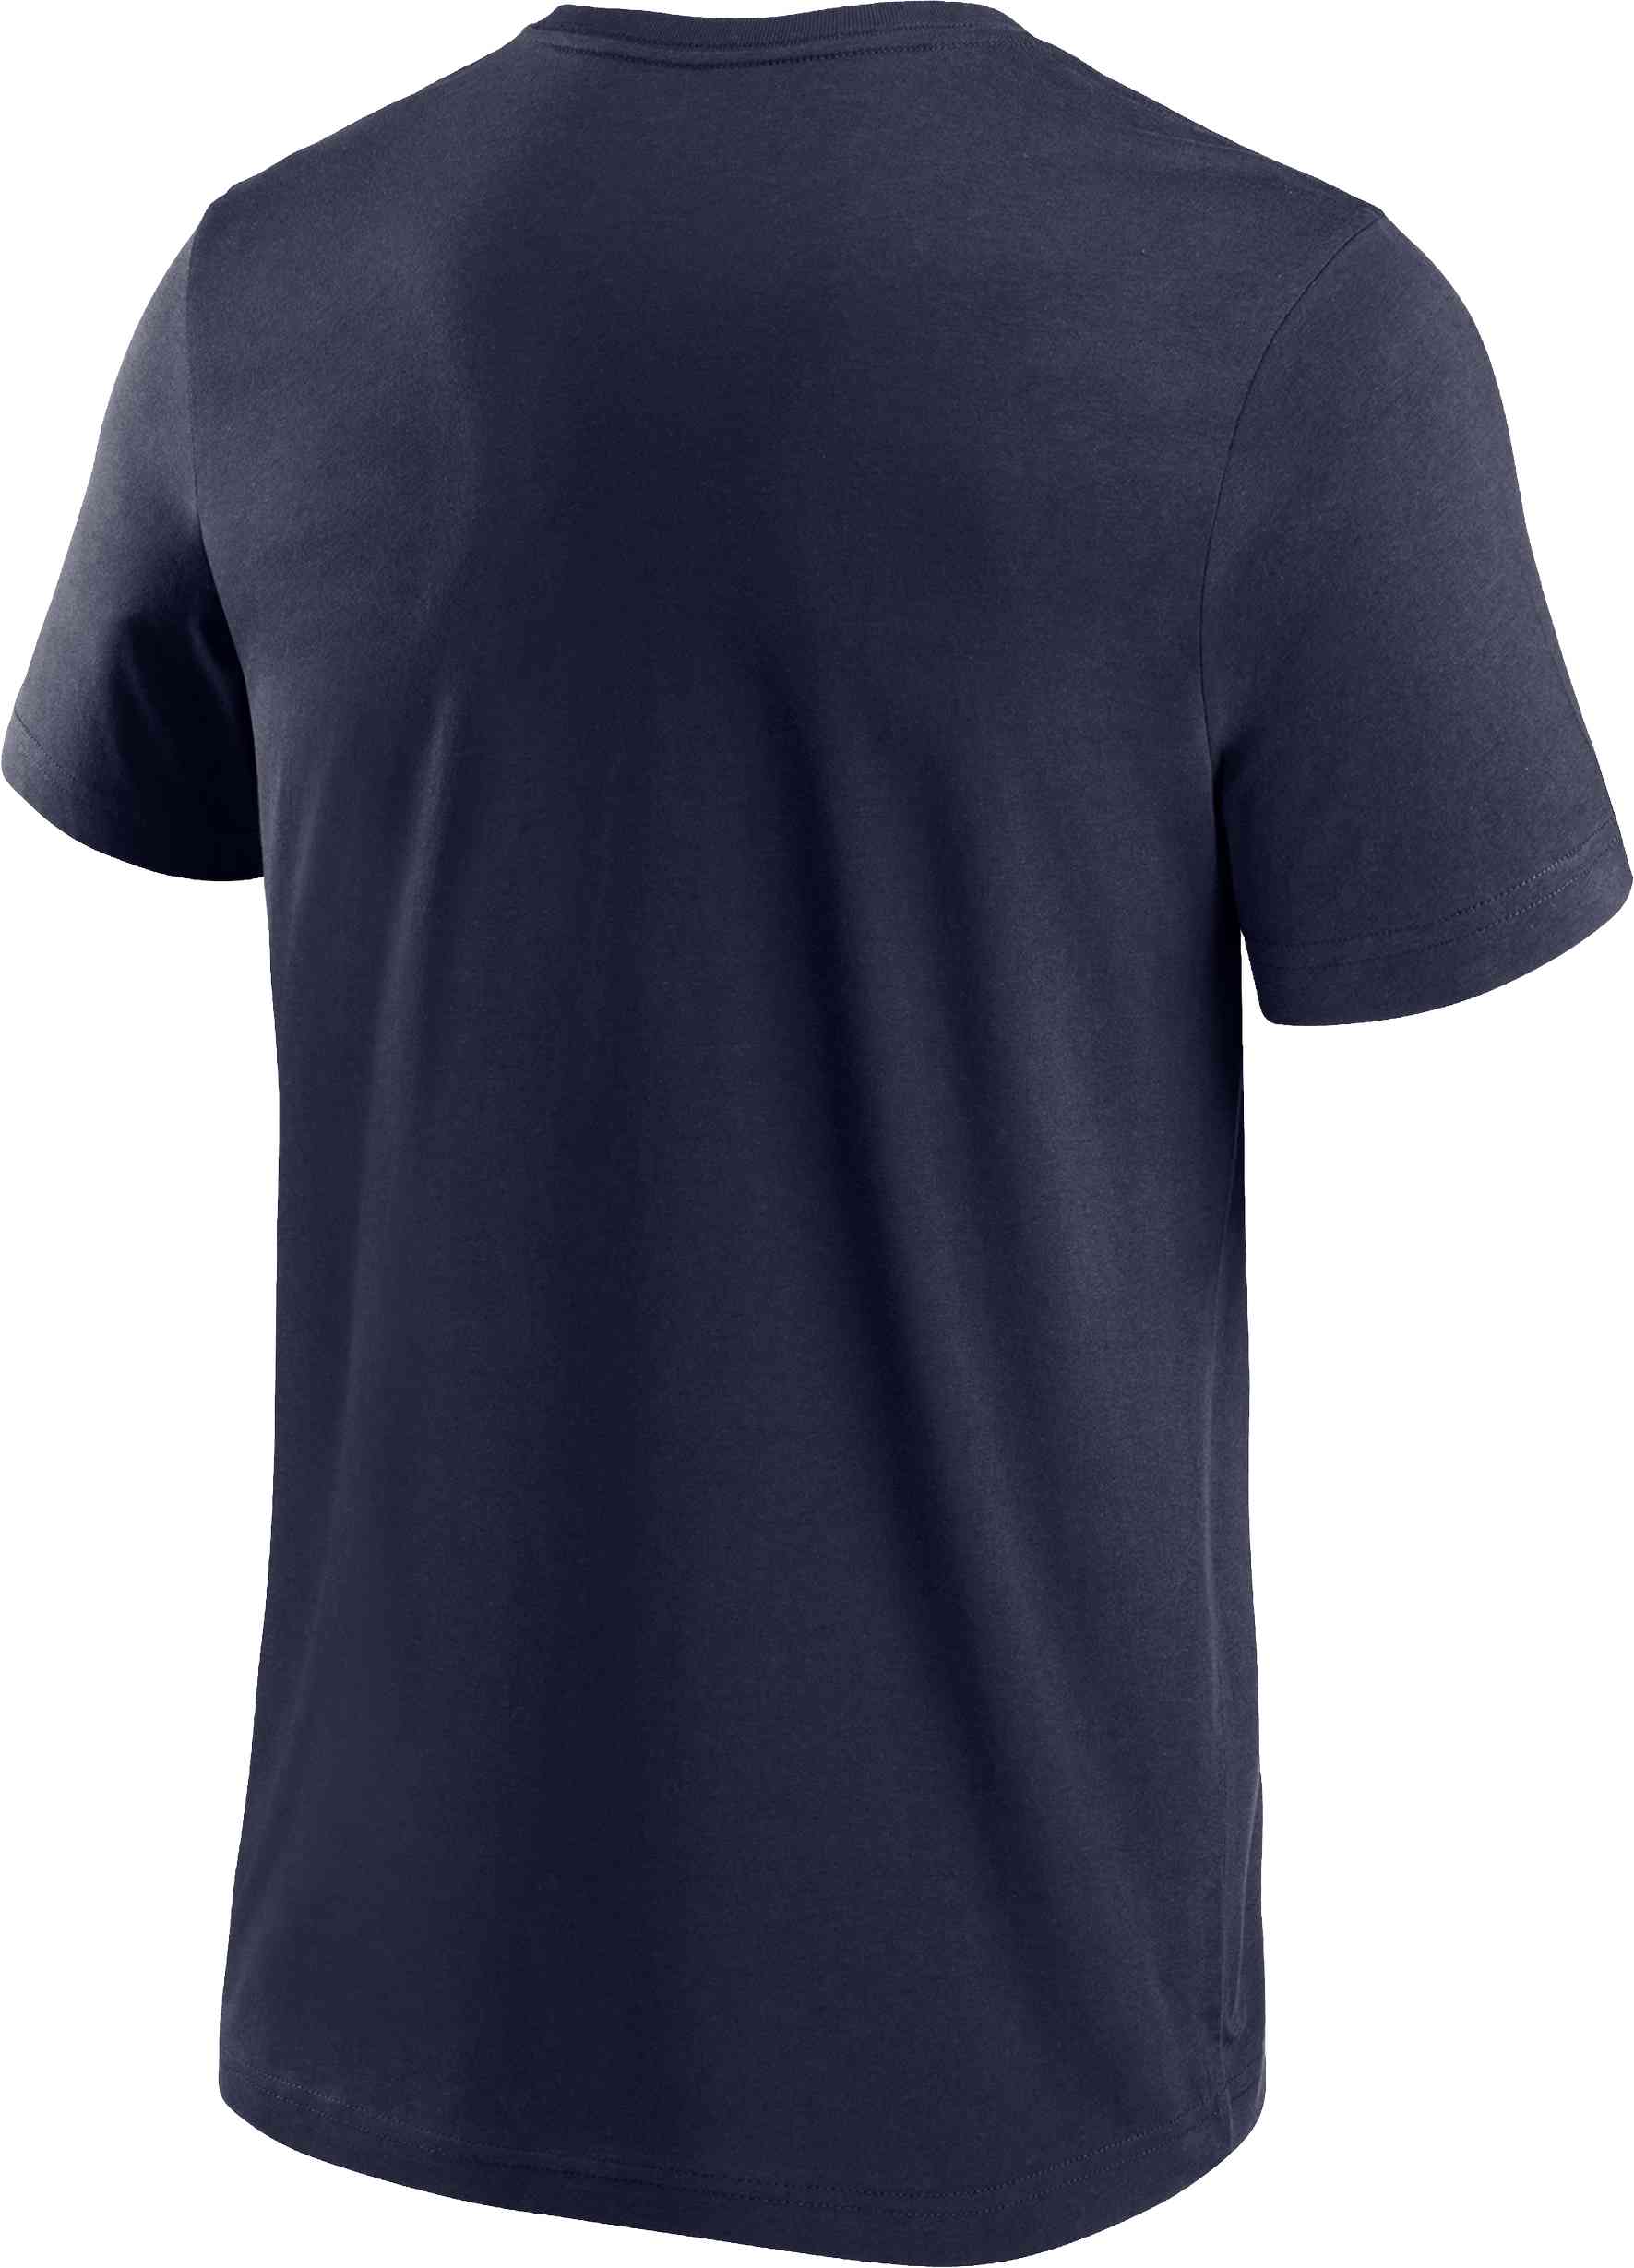 Fanatics - NFL Dallas Cowboys Primary Logo Graphic T-Shirt